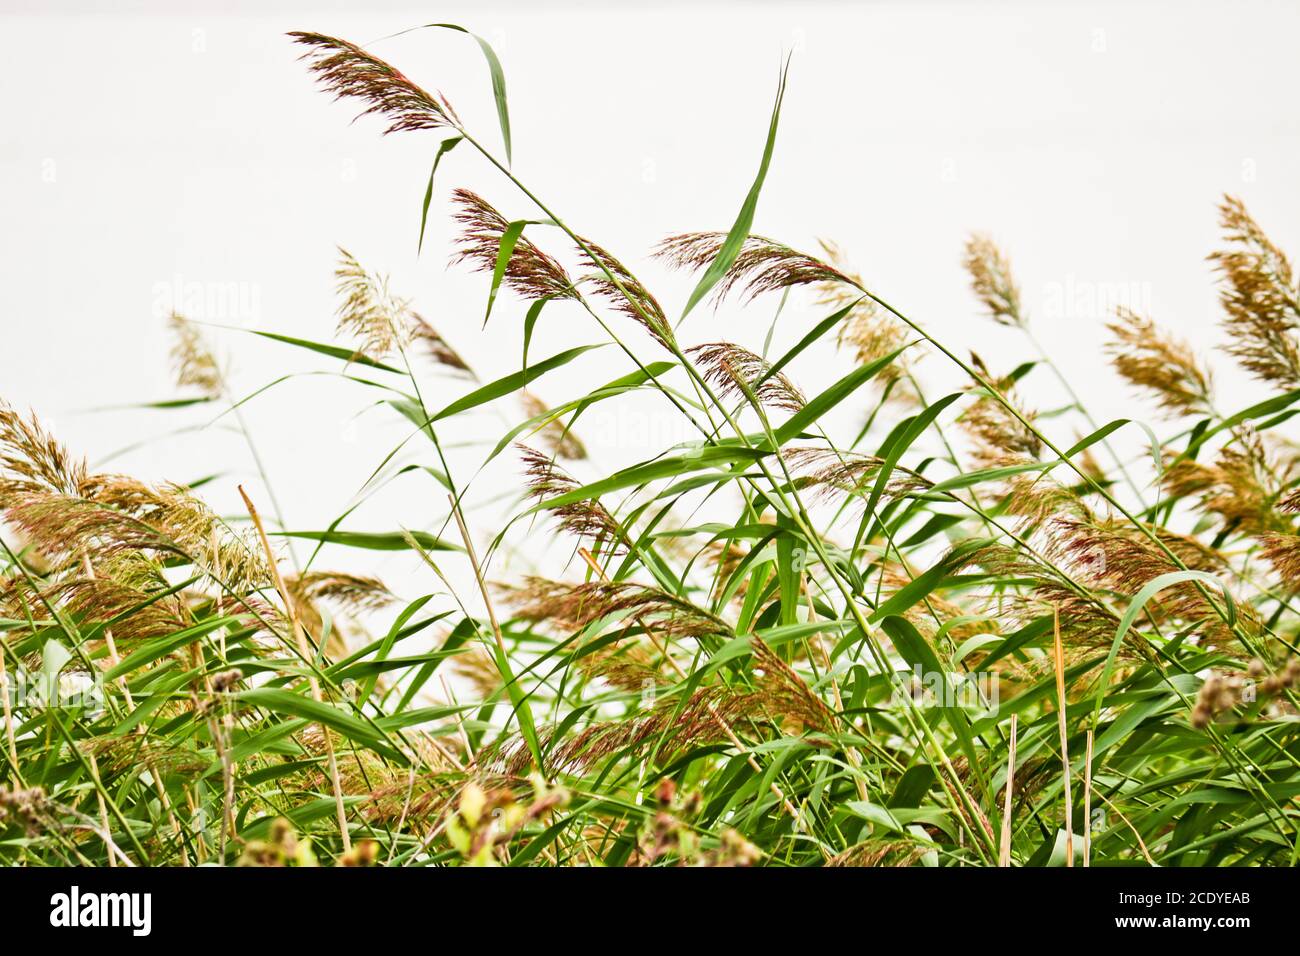 Summer background - lake reeds with seed panicles. Coastal landscape. Stock Photo